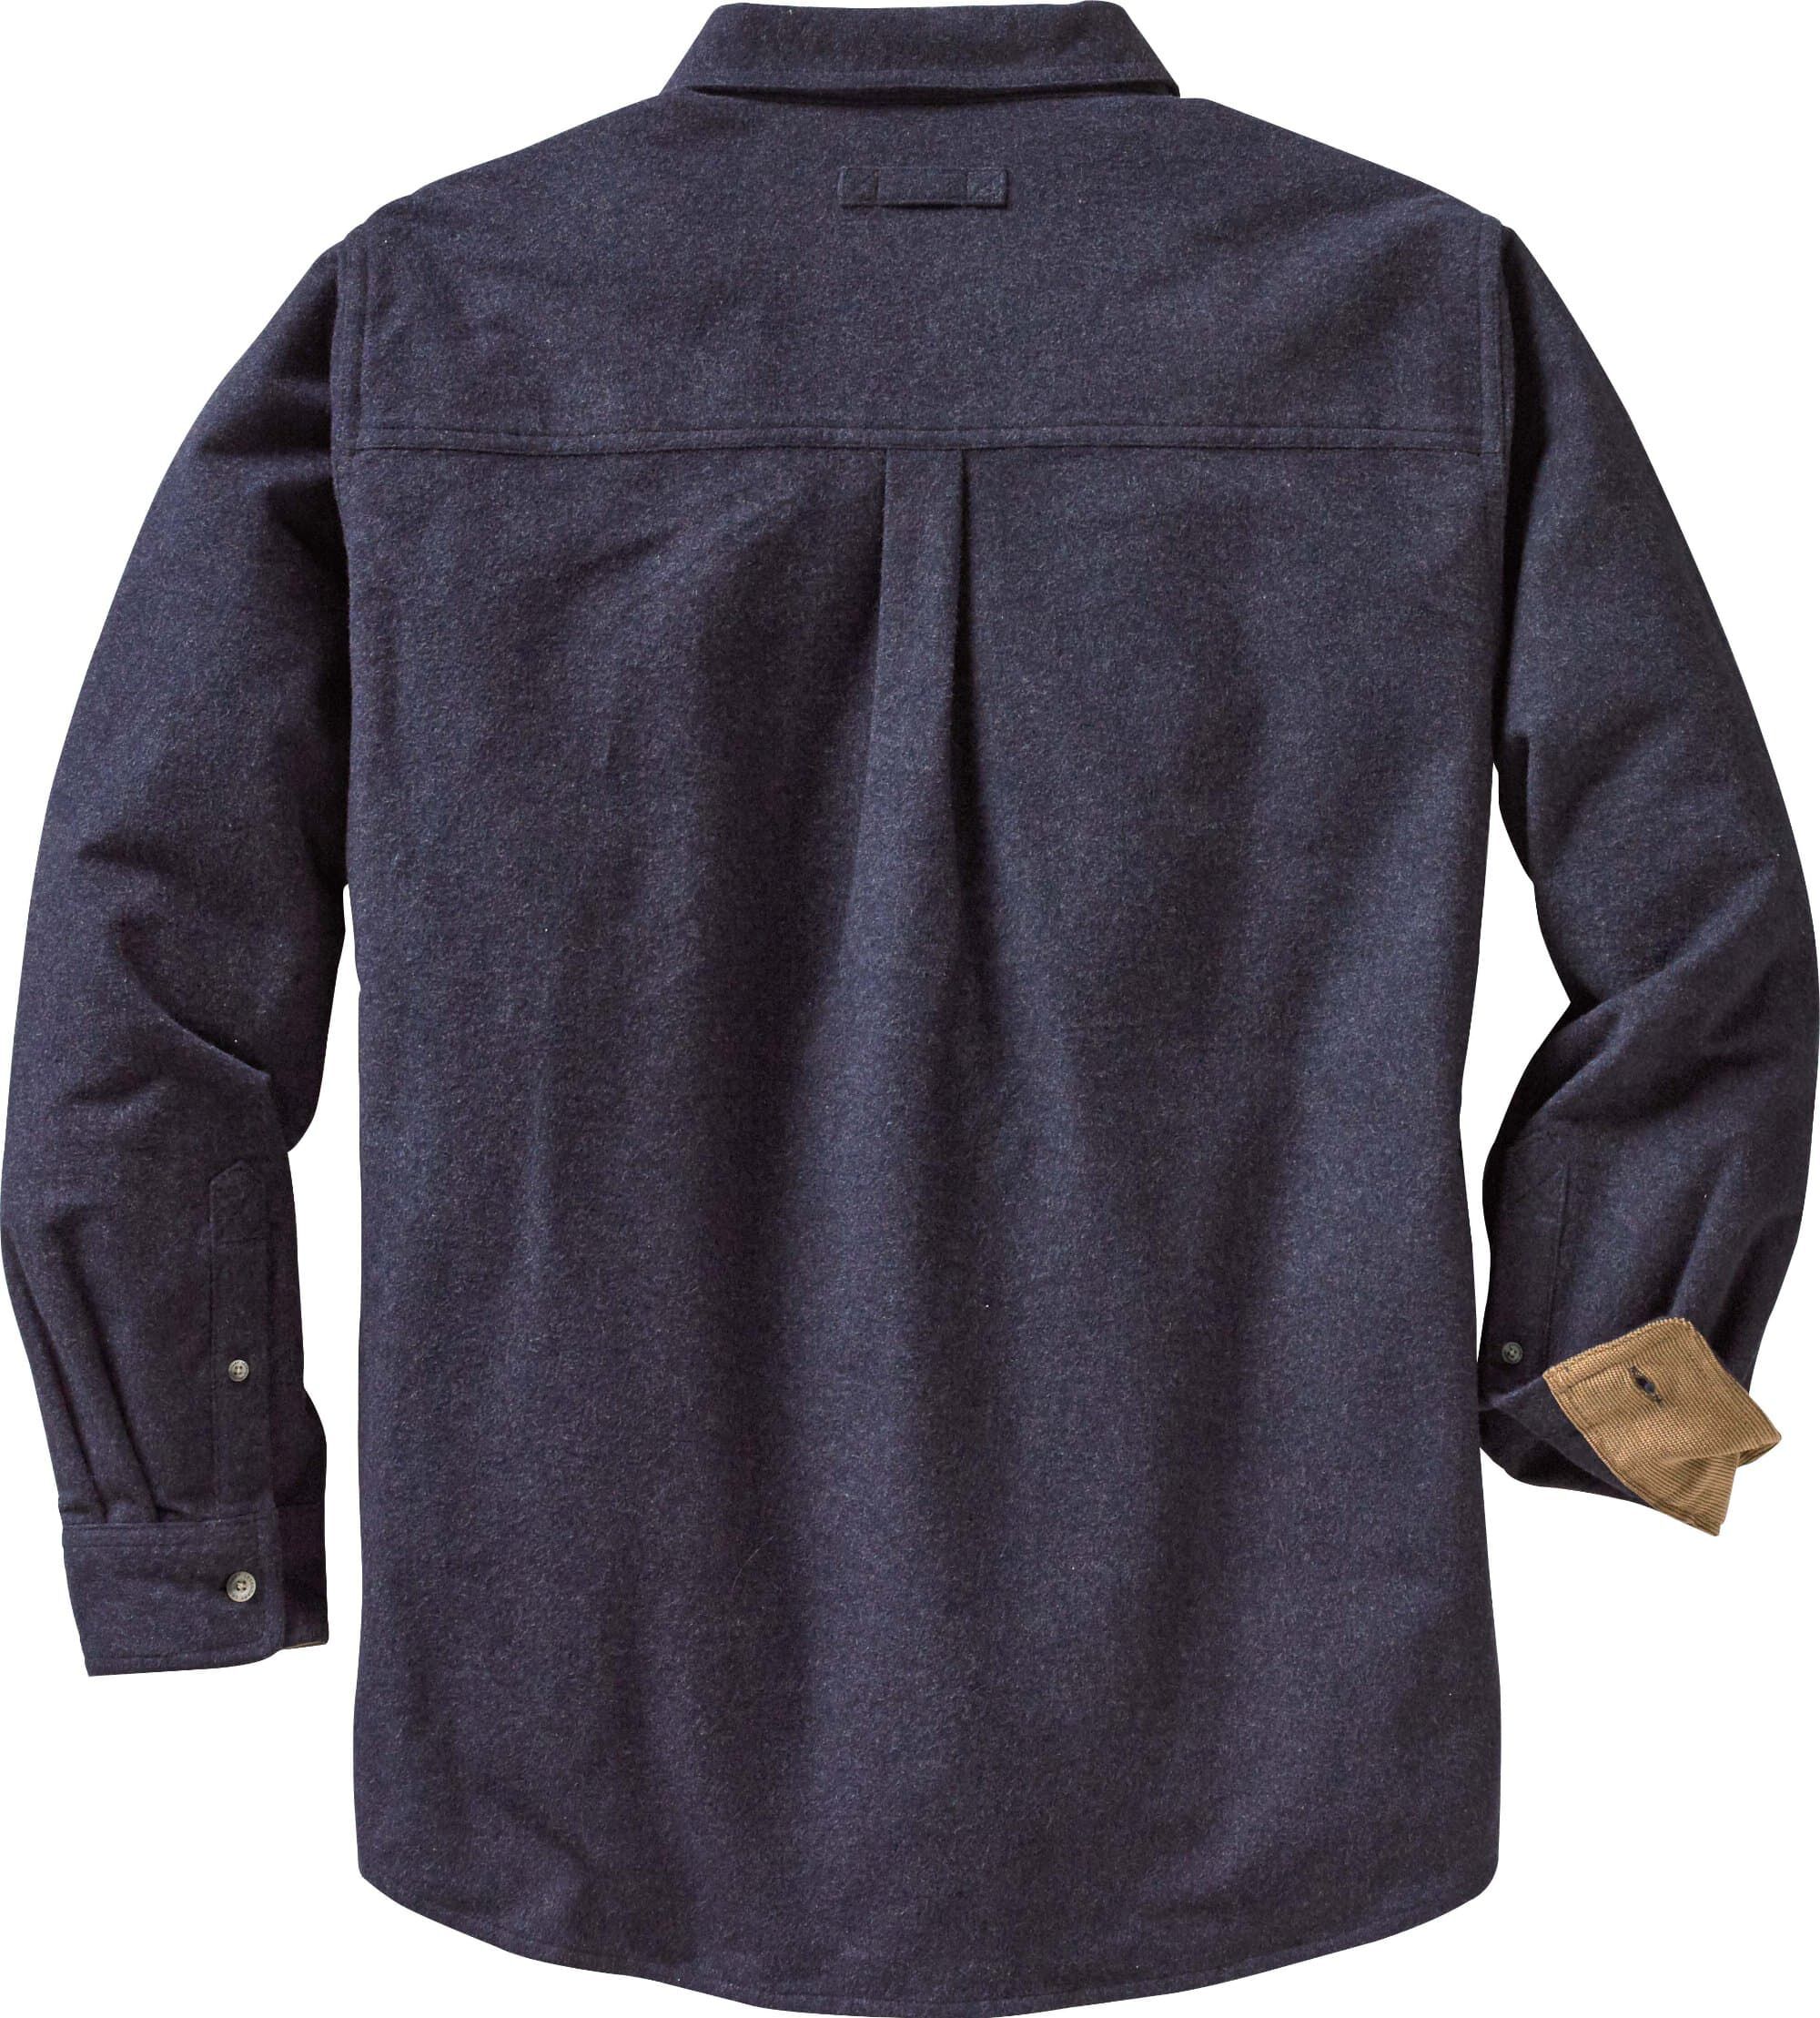 Legendary Whitetails Men's Buck Camp Flannel Shirt - image 2 of 3